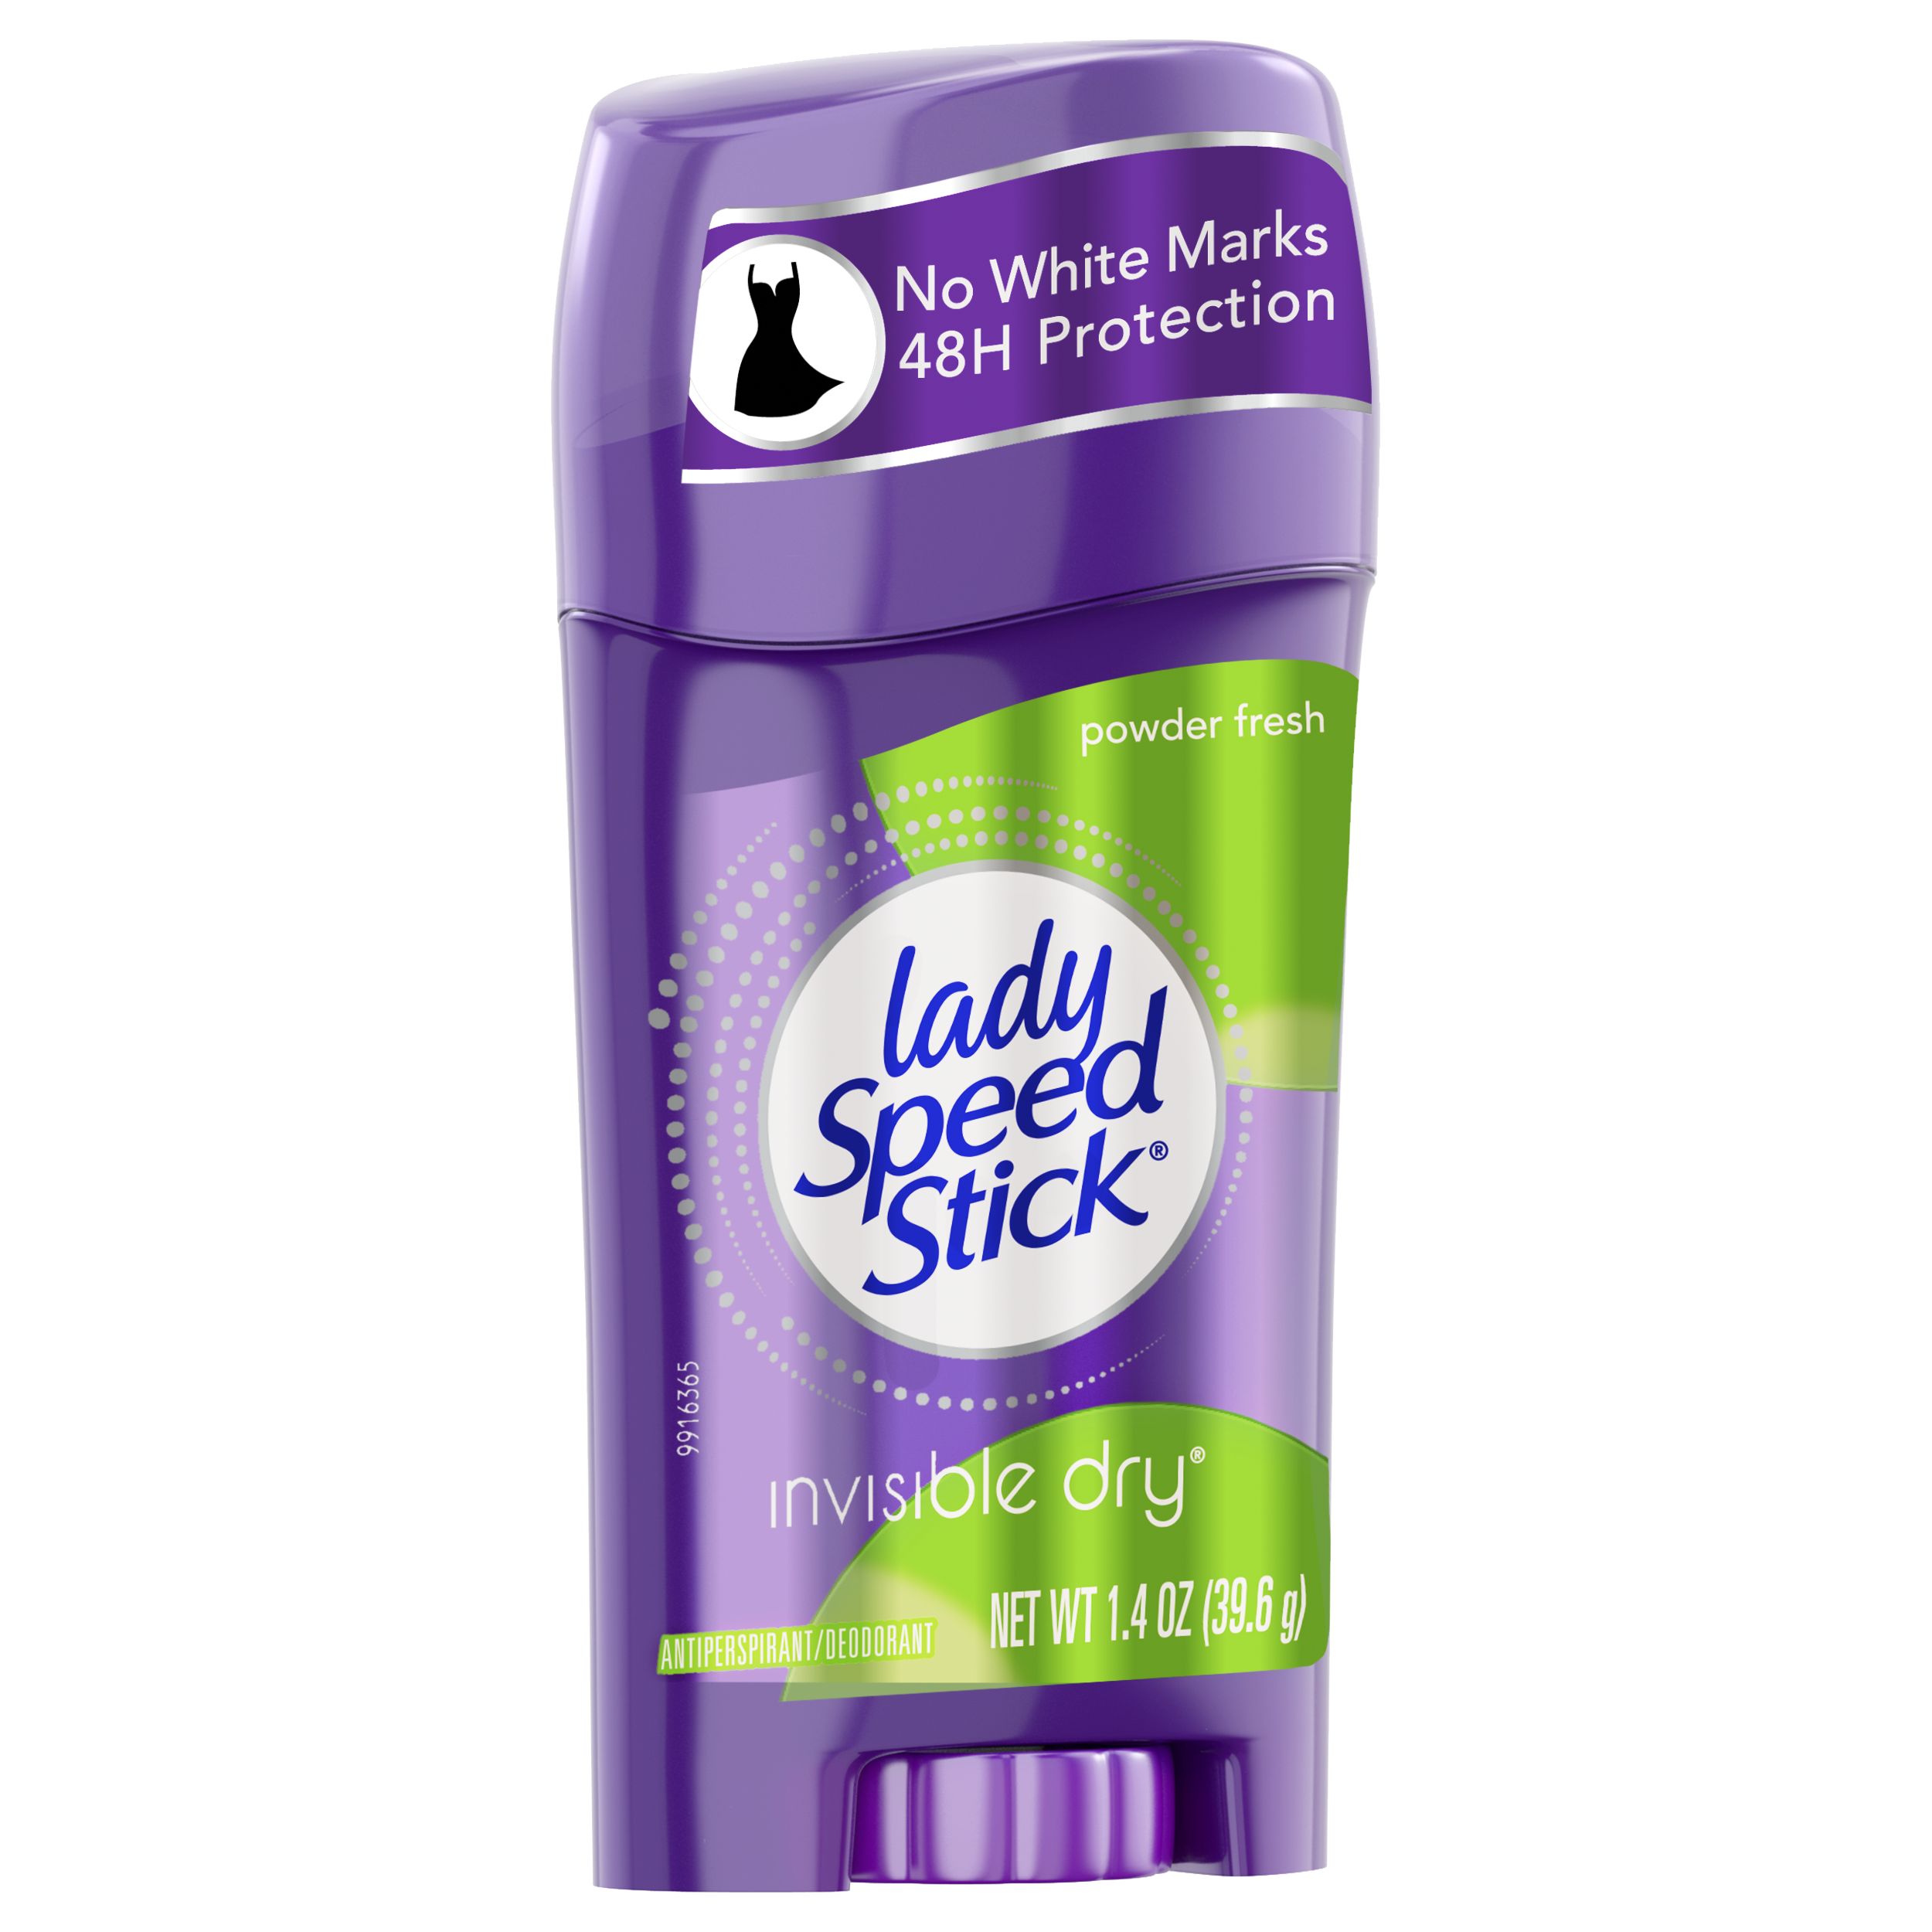 Lady Speed Stick Invisible Dry Antiperspirant Deodorant, Powder Fresh, 1.4 oz. - image 3 of 4